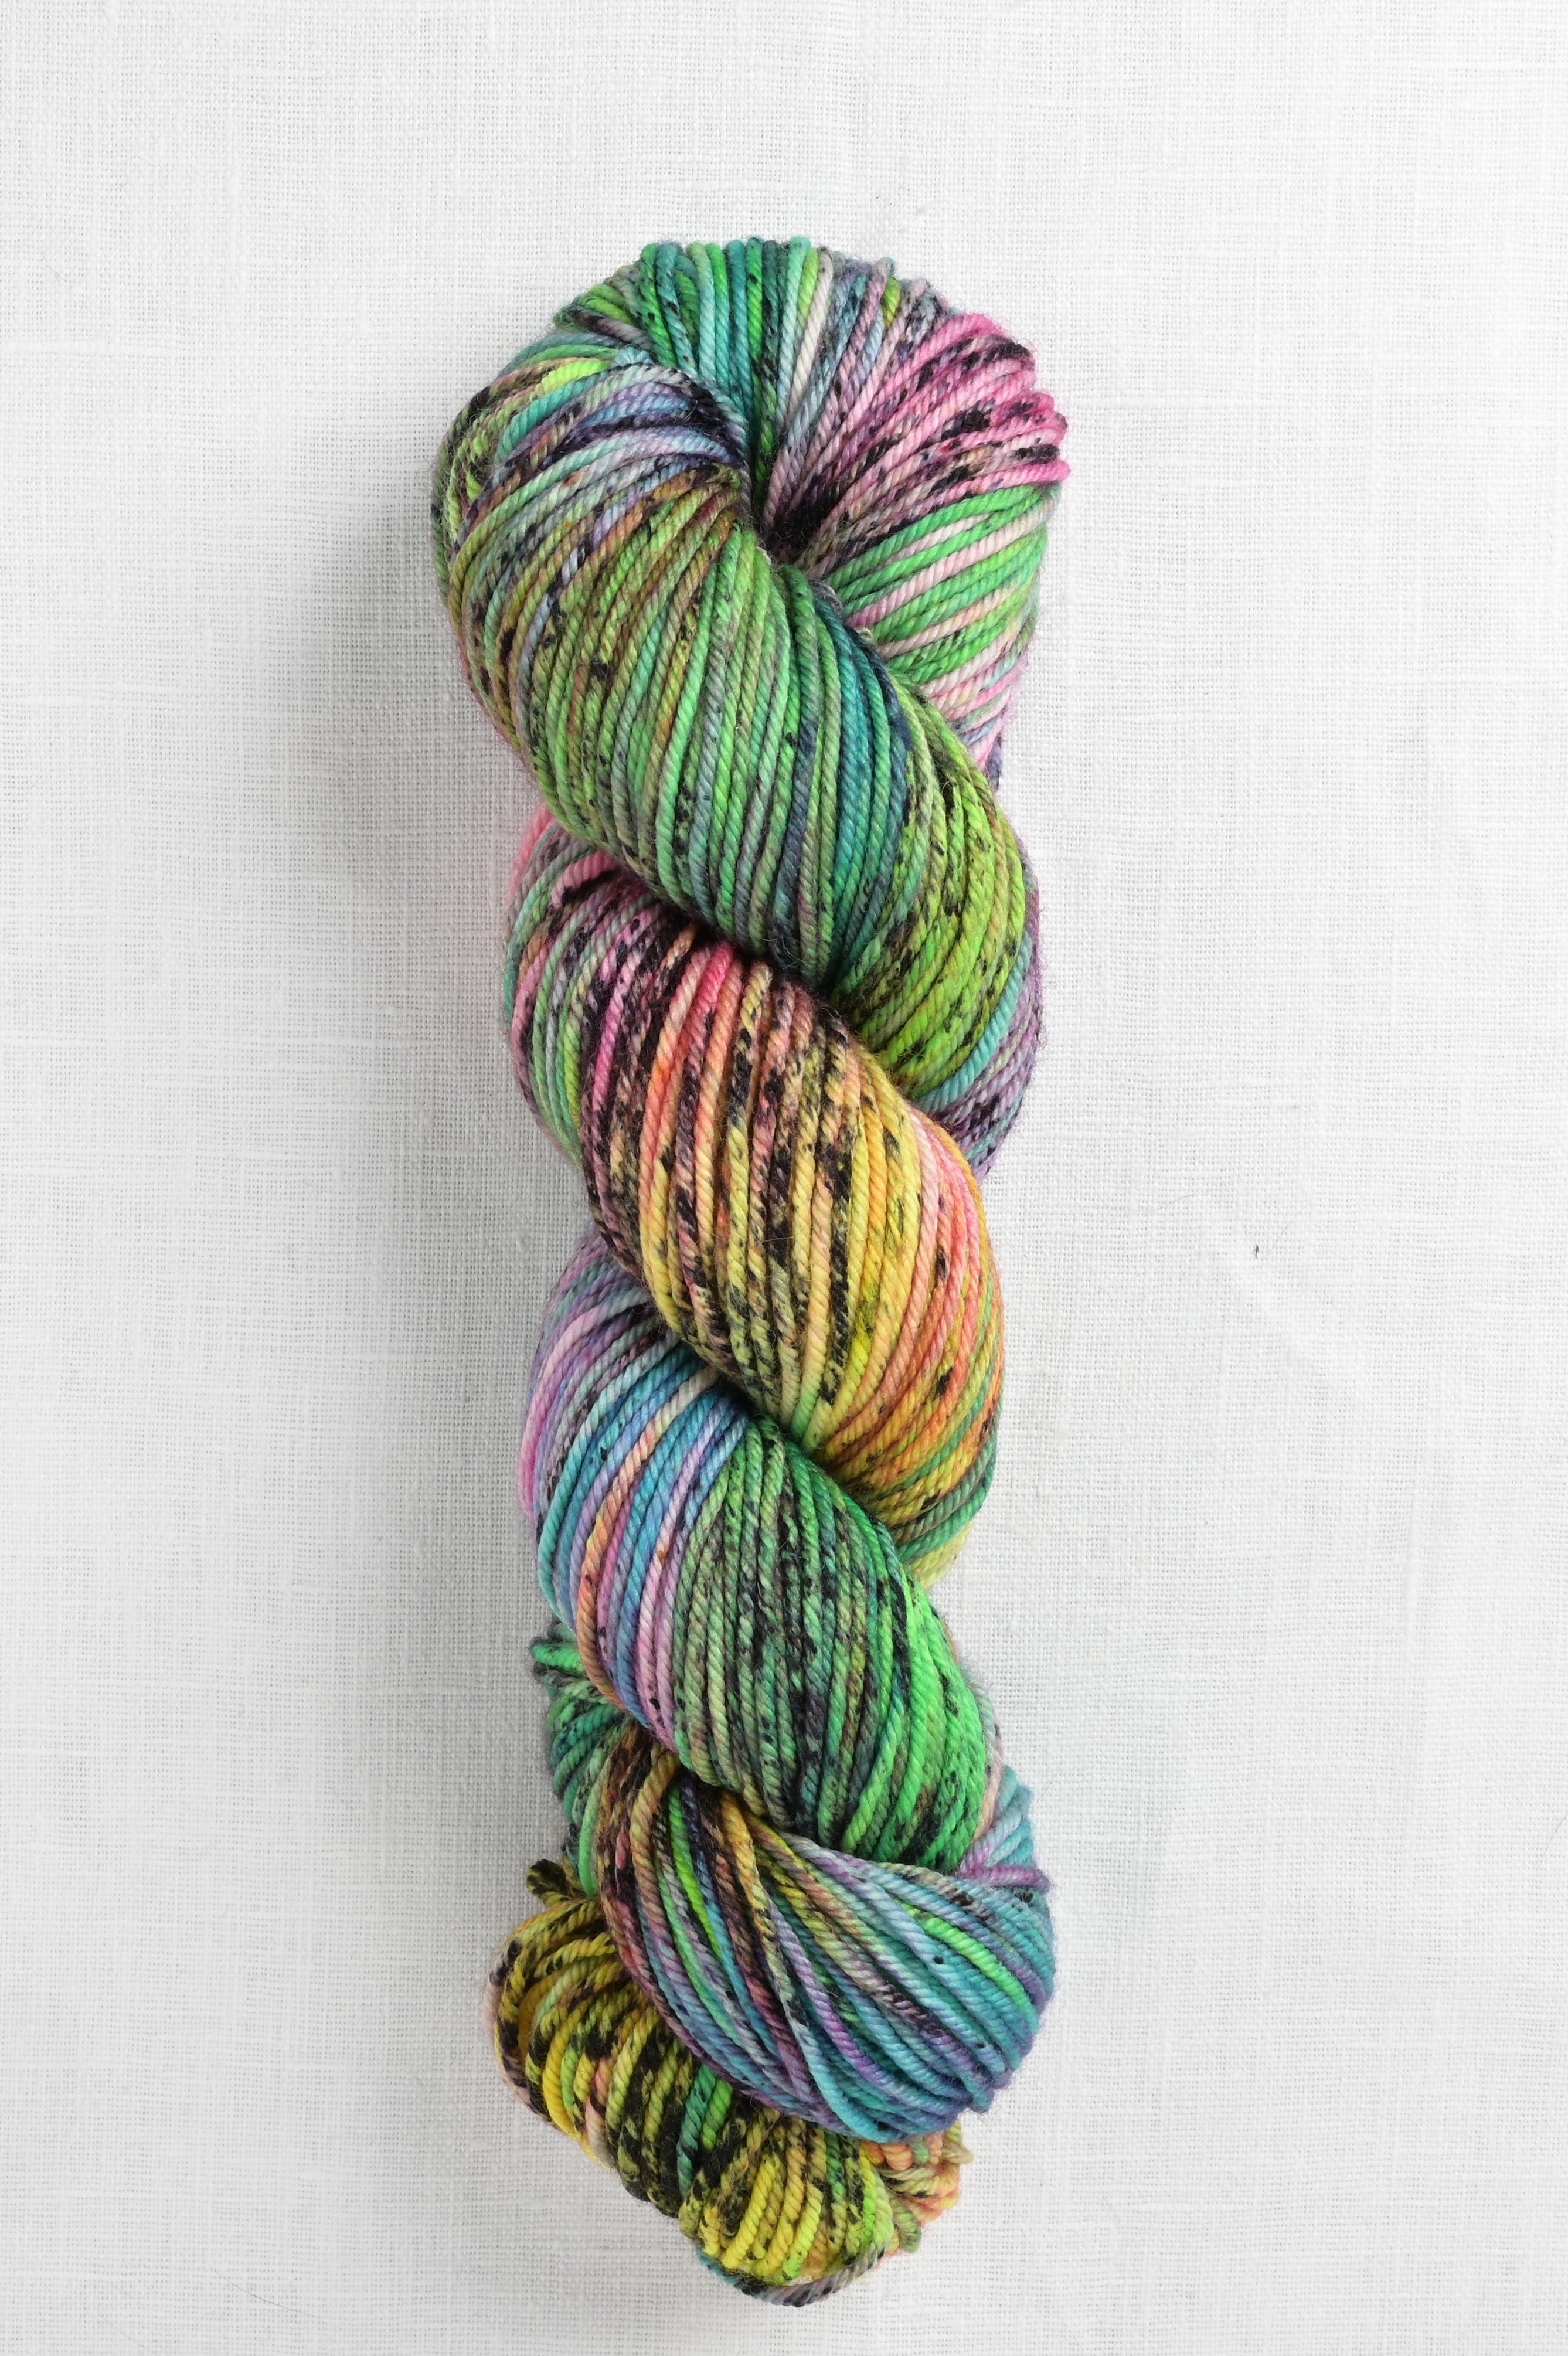 Multi-colored variegated yarn. Skeins background